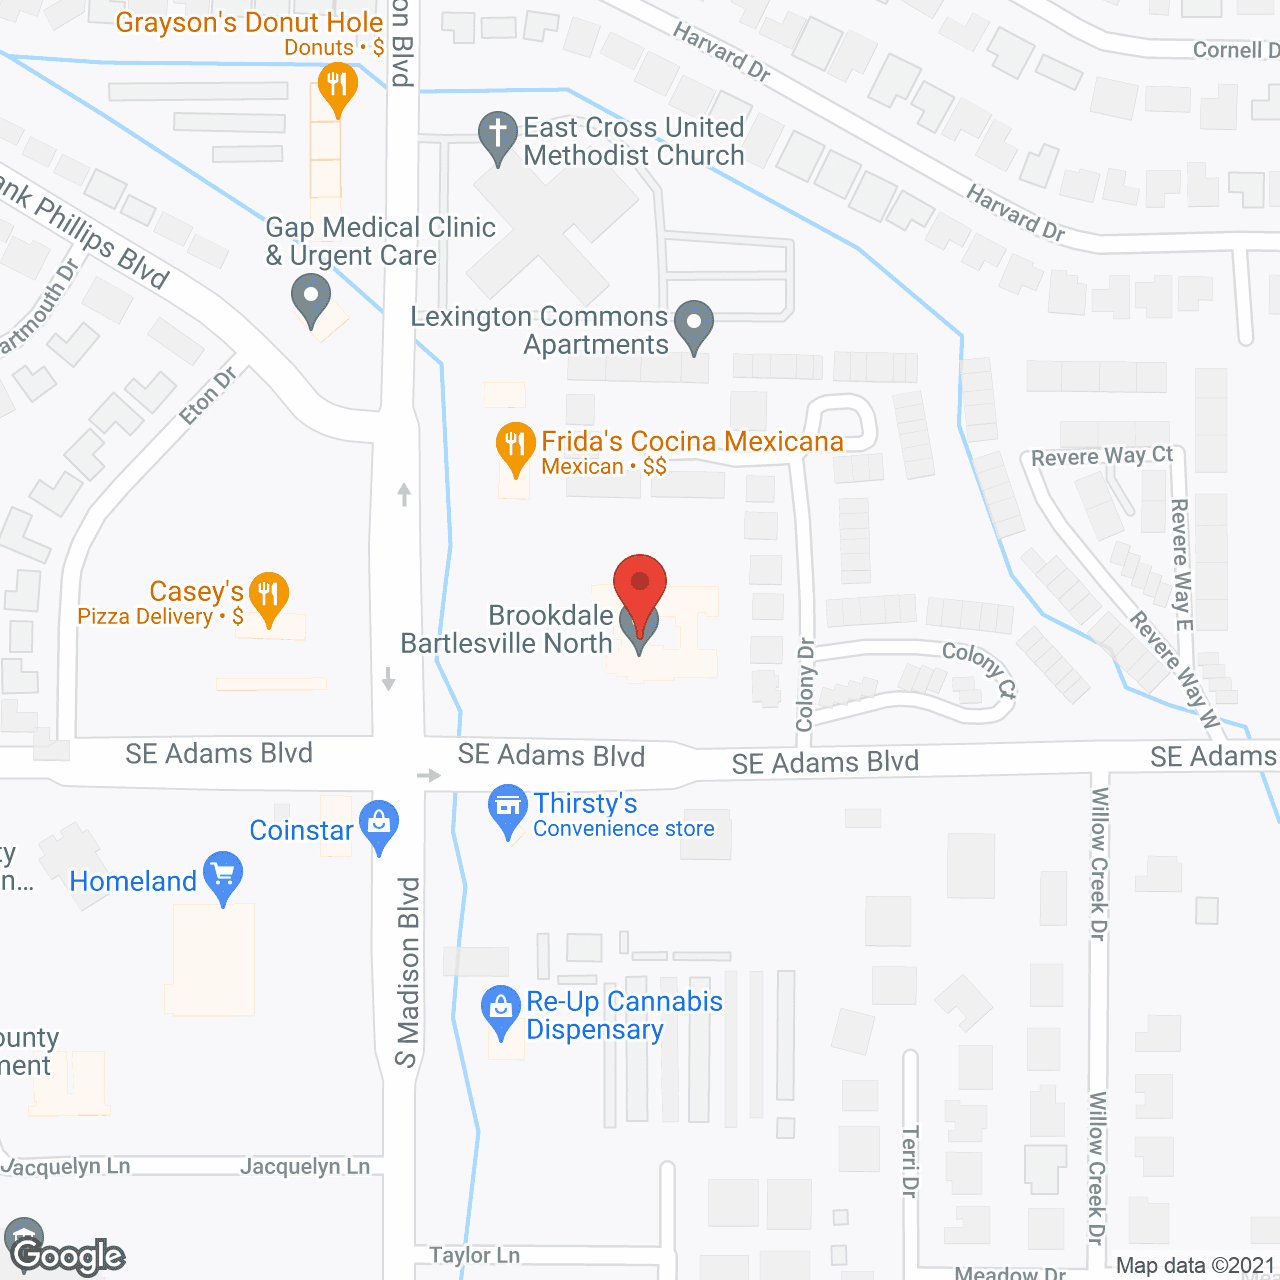 Brookdale Bartlesville North in google map